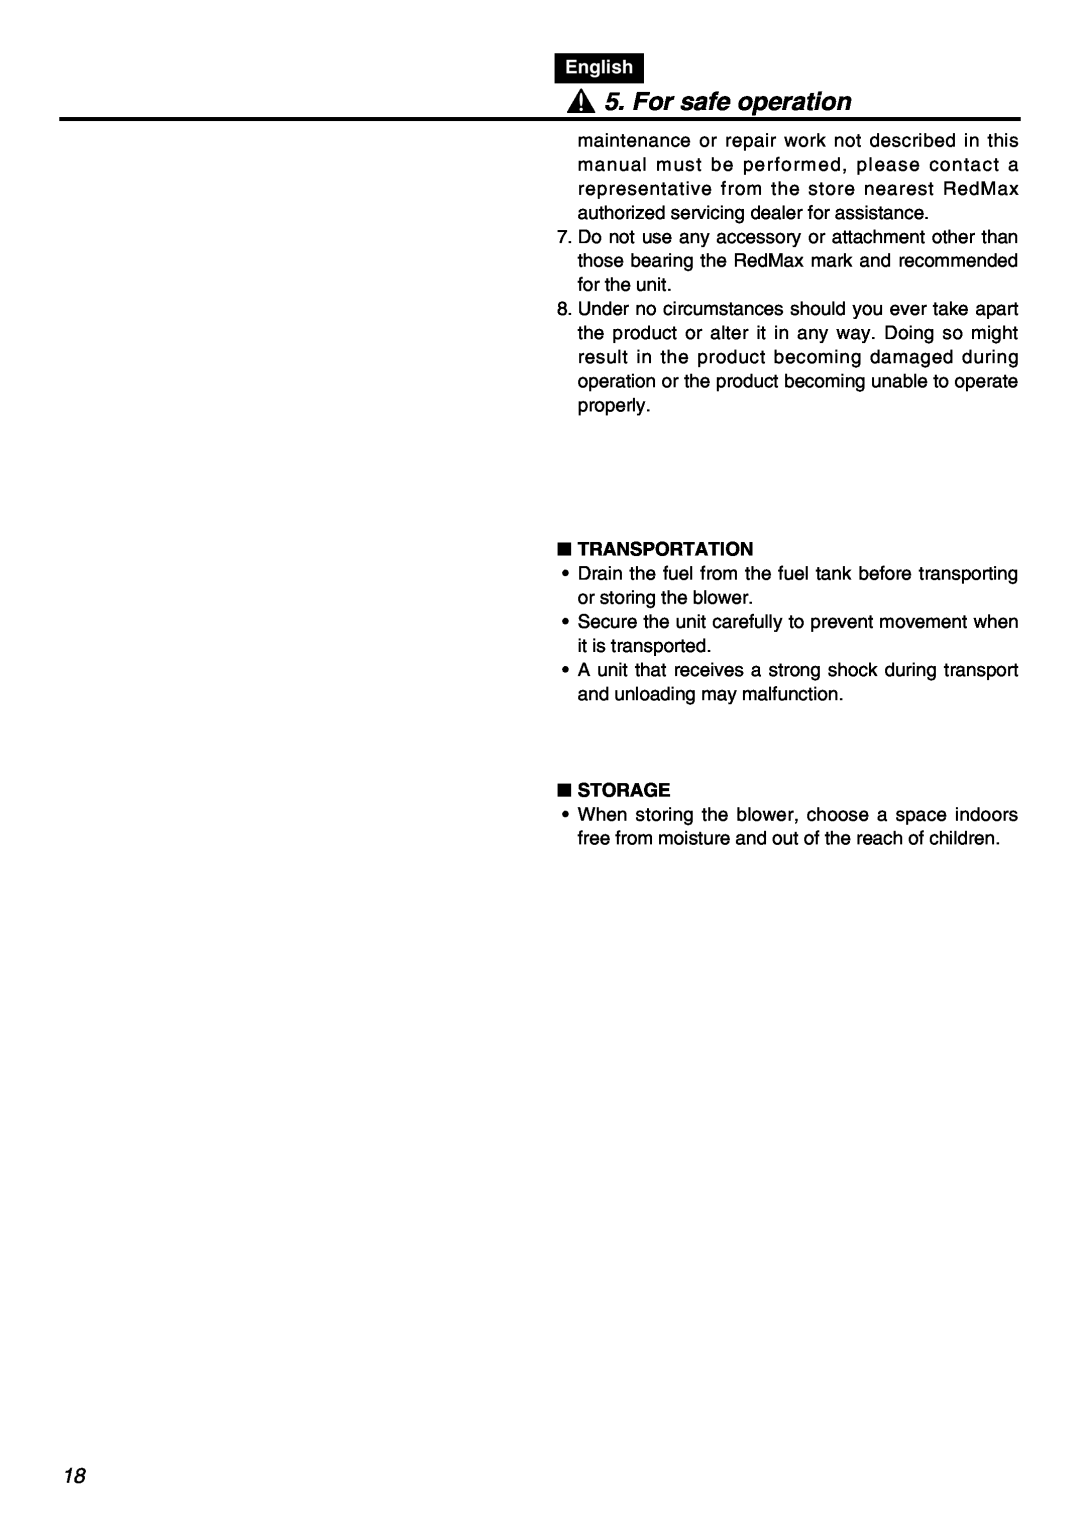 RedMax EBZ8001RH manual For safe operation, English, Transportation, Storage 